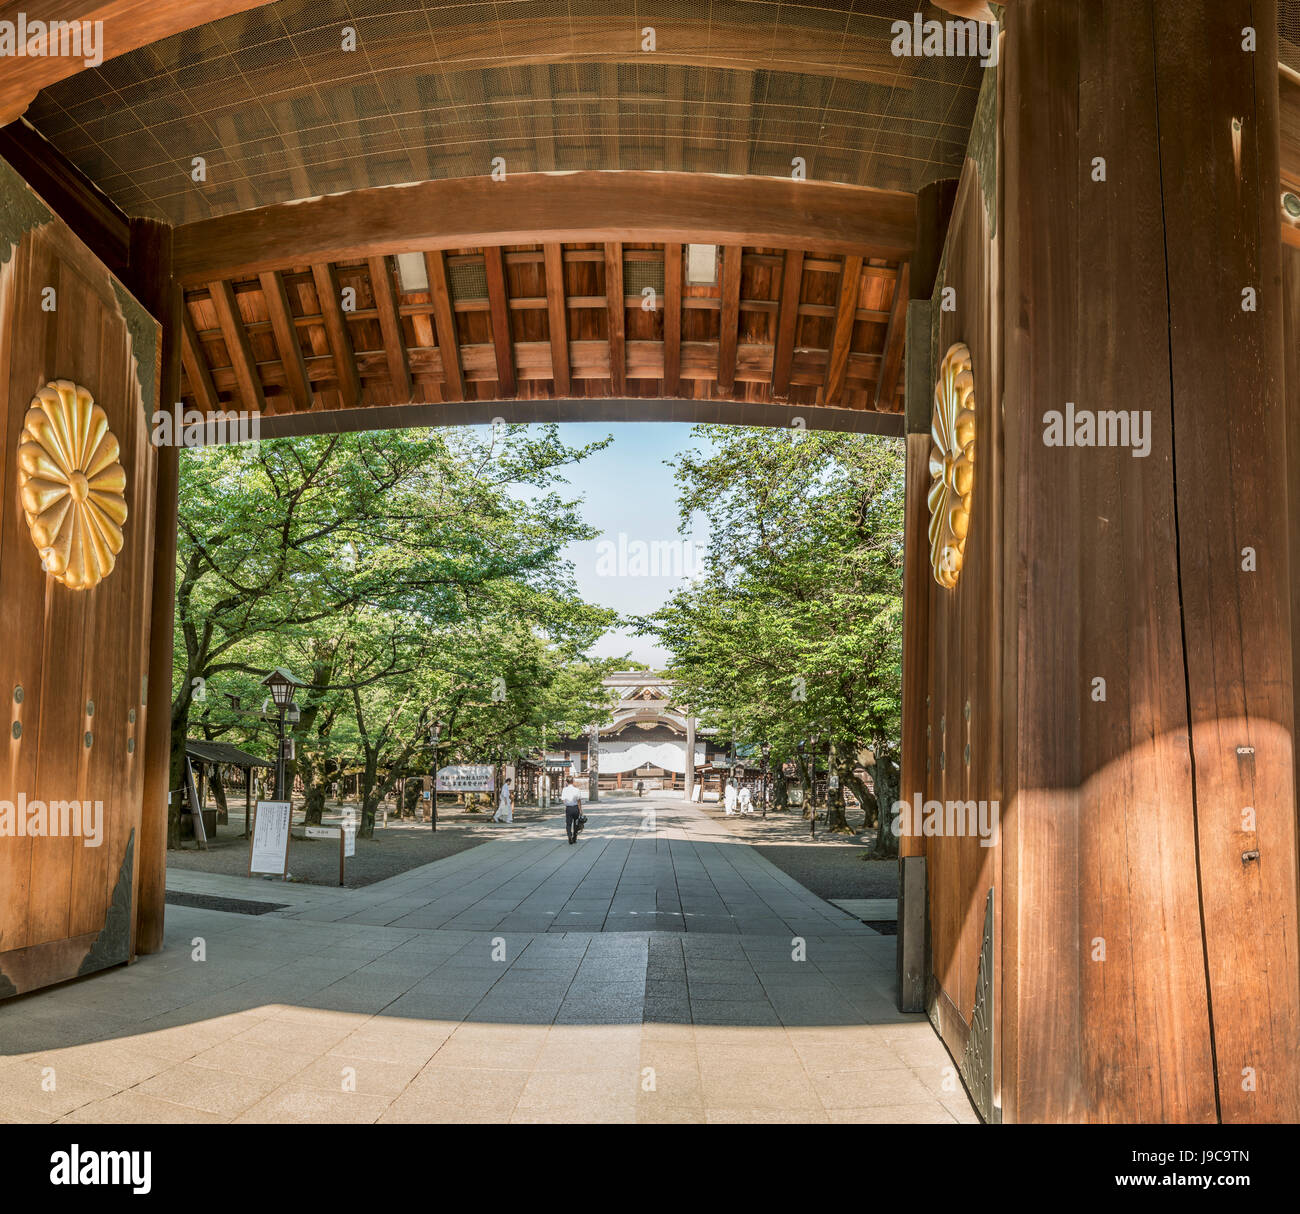 Shinmon Gate at the entrance of the Imperial Shrine of Yasukuni, informally known as the Yasukuni Shrine, Chiyoda, Tokyo, Japan Stock Photo